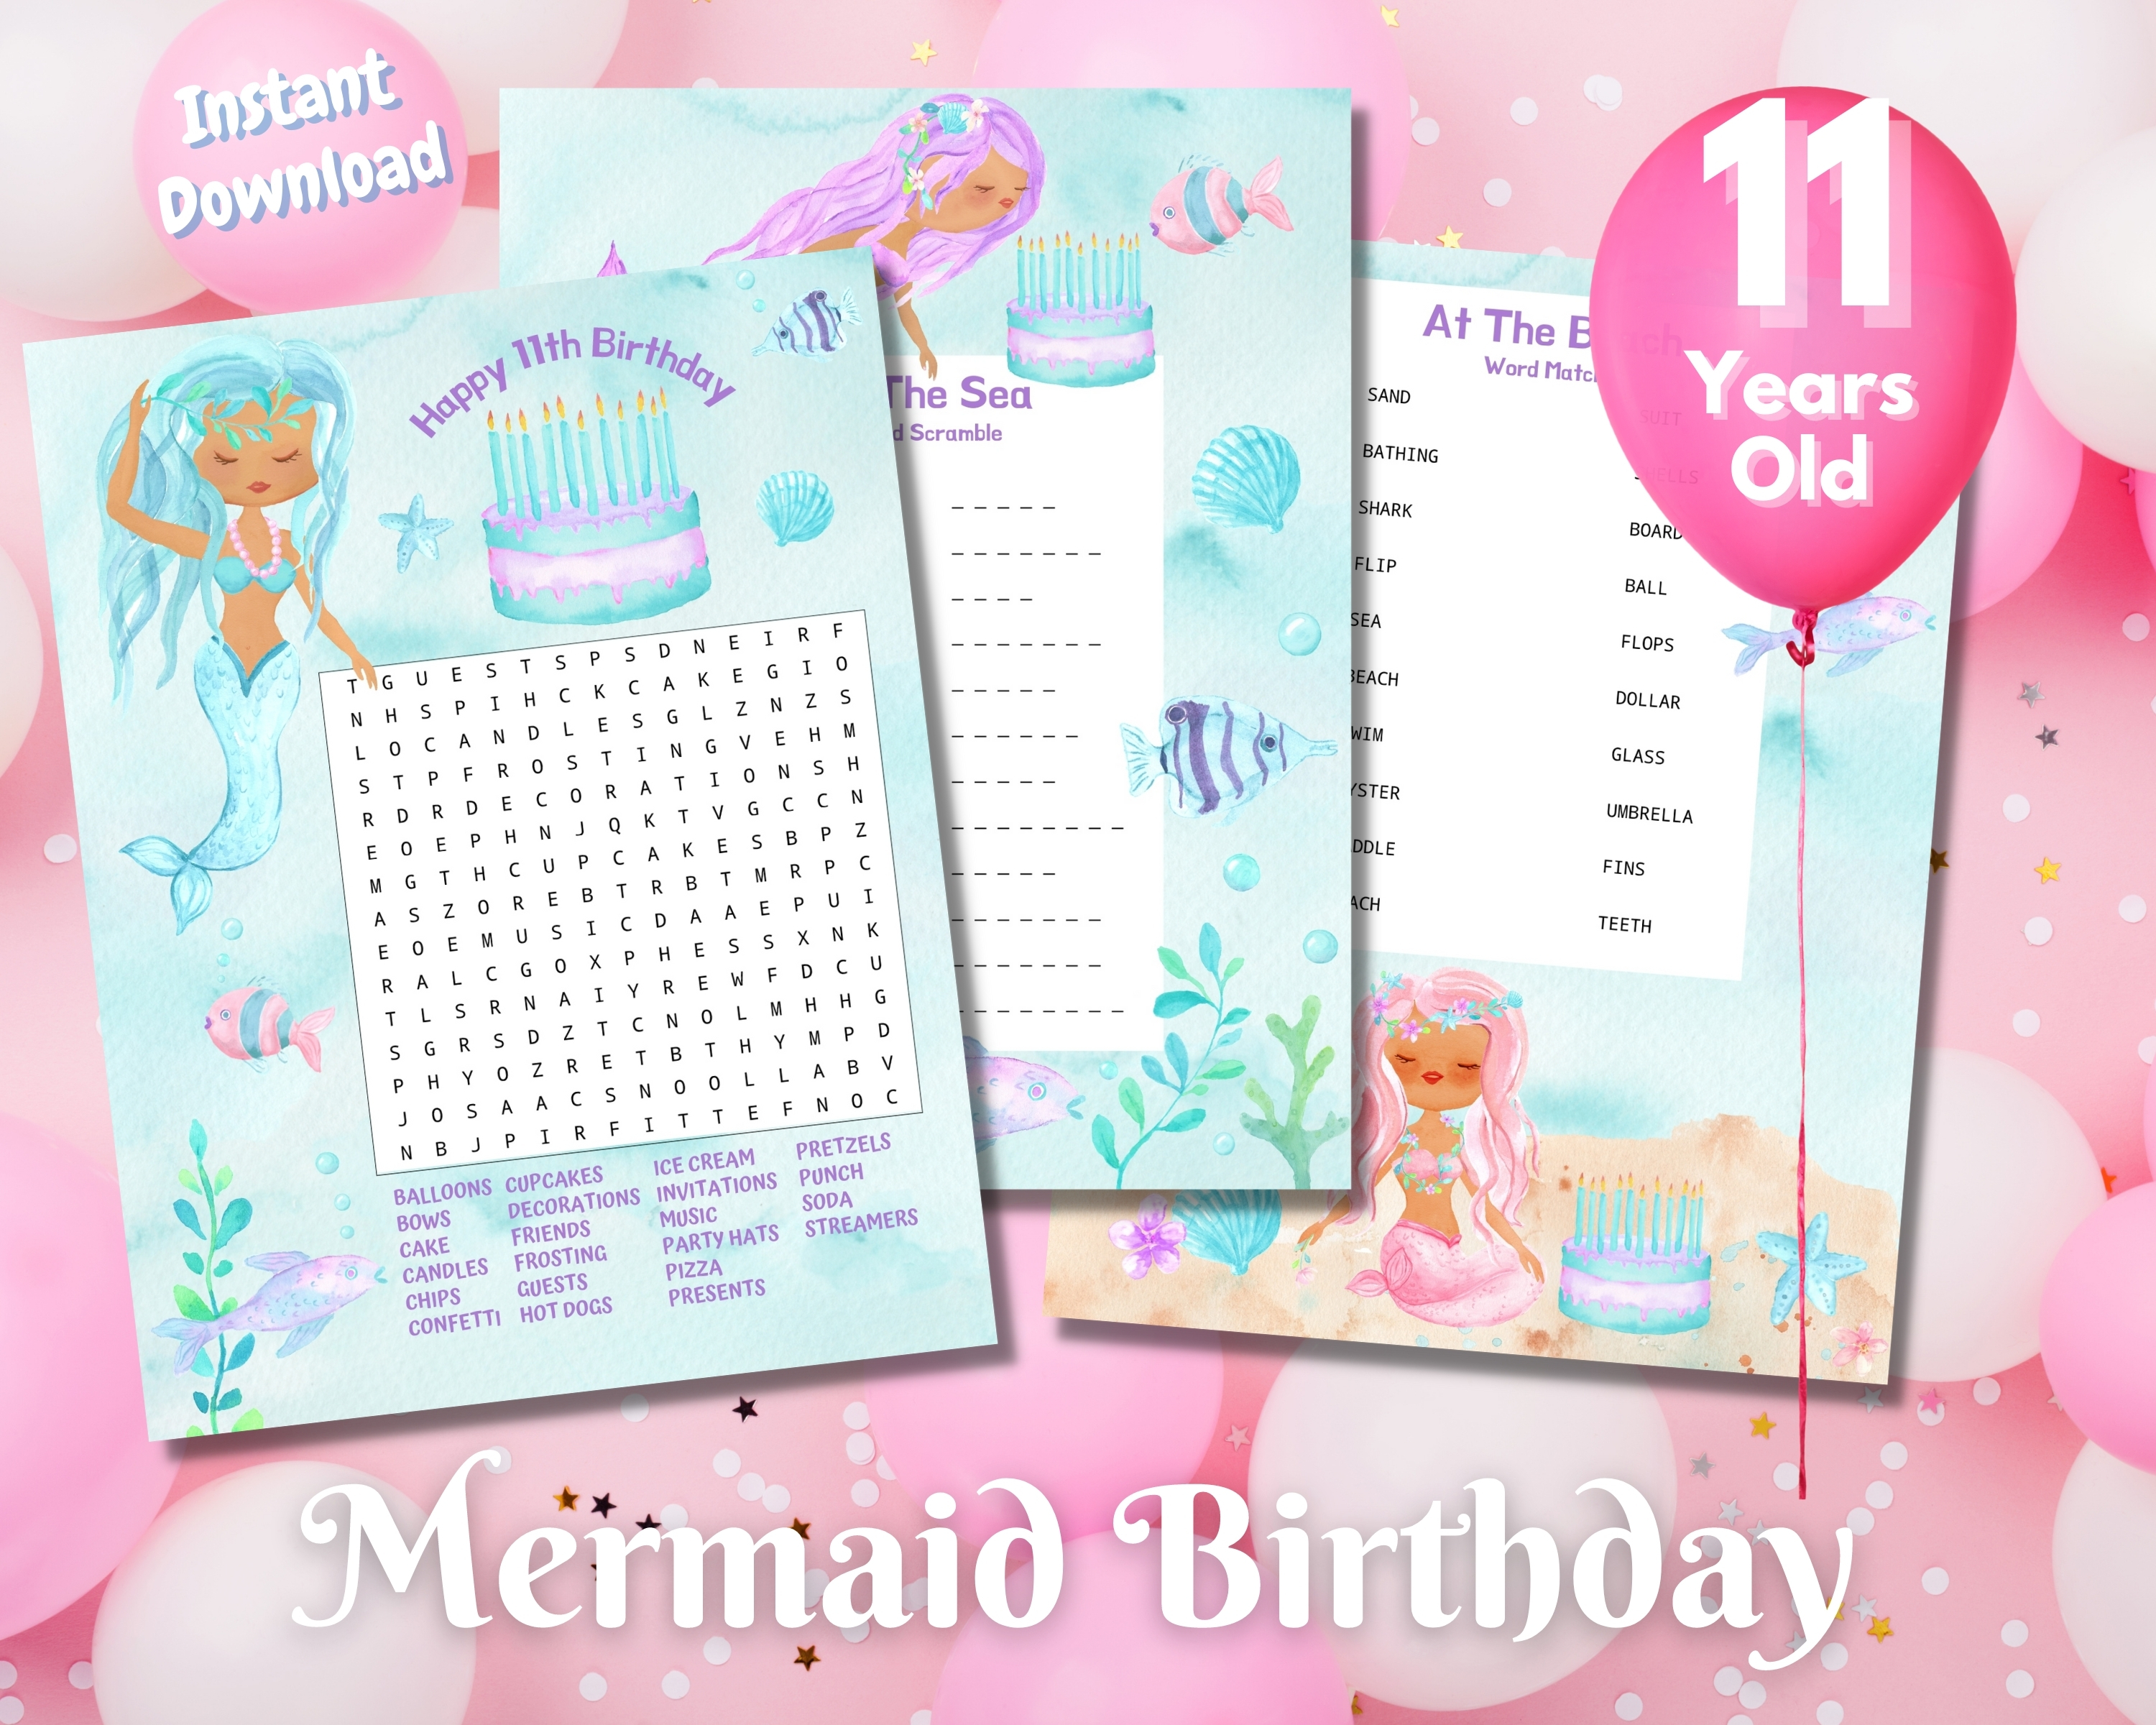 Eleventh Mermaid Birthday Word Puzzles - Dark Complexion